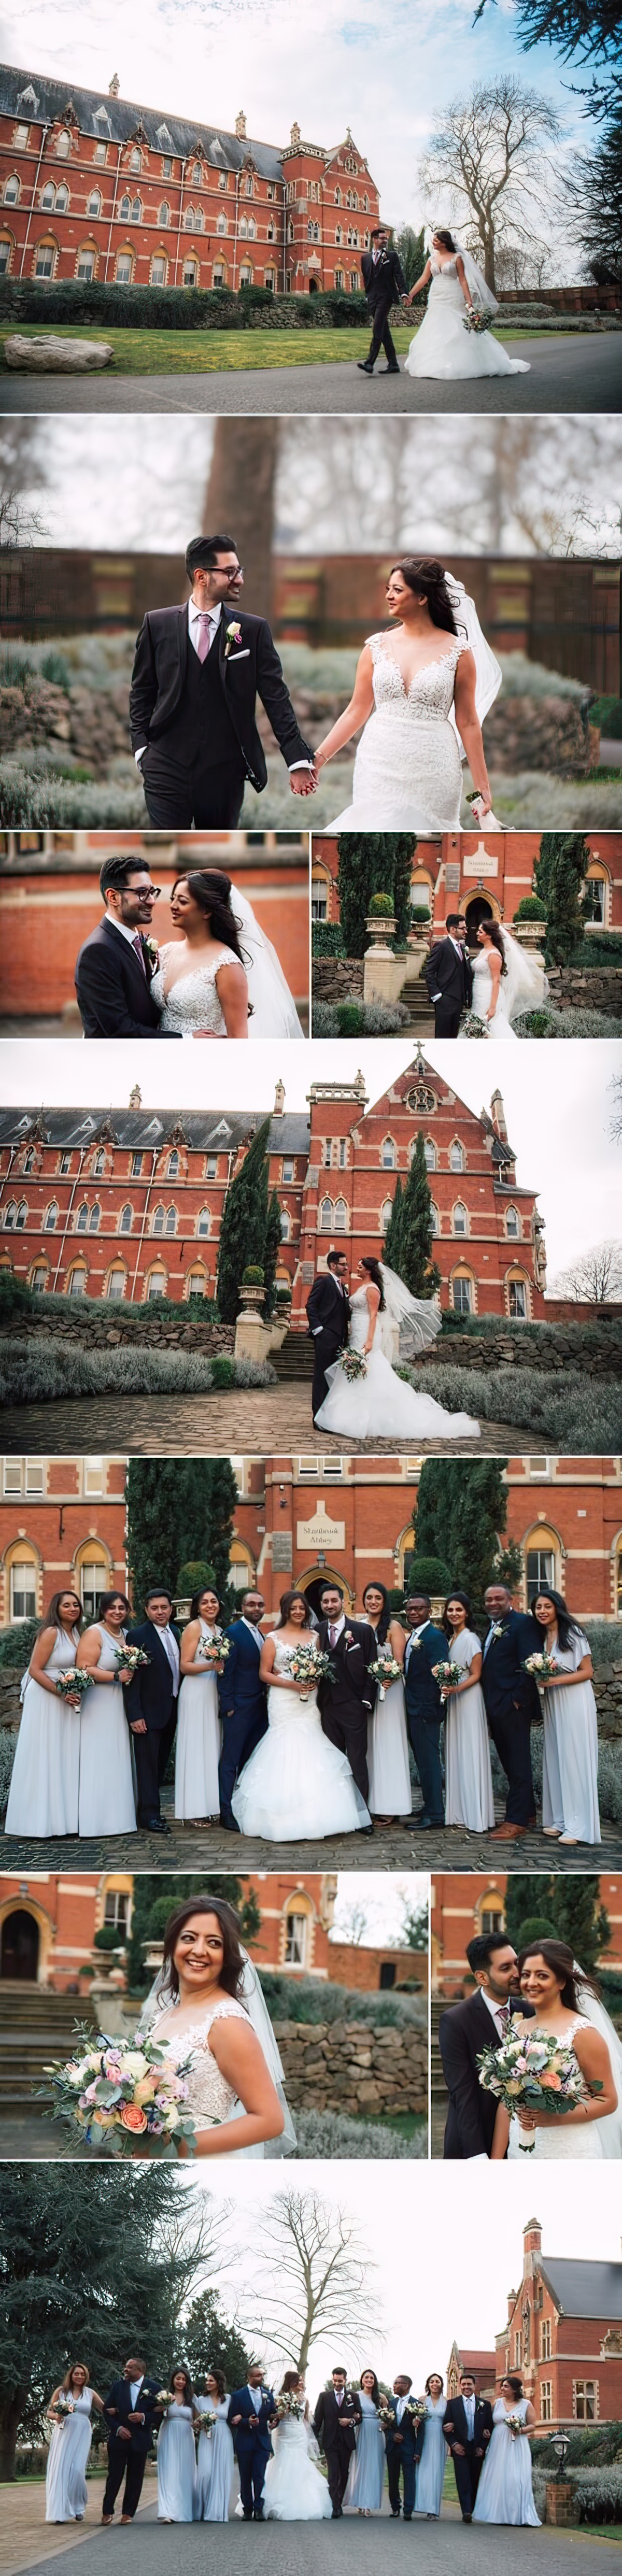 Standbrook-Abbey-wedding photography - image 9